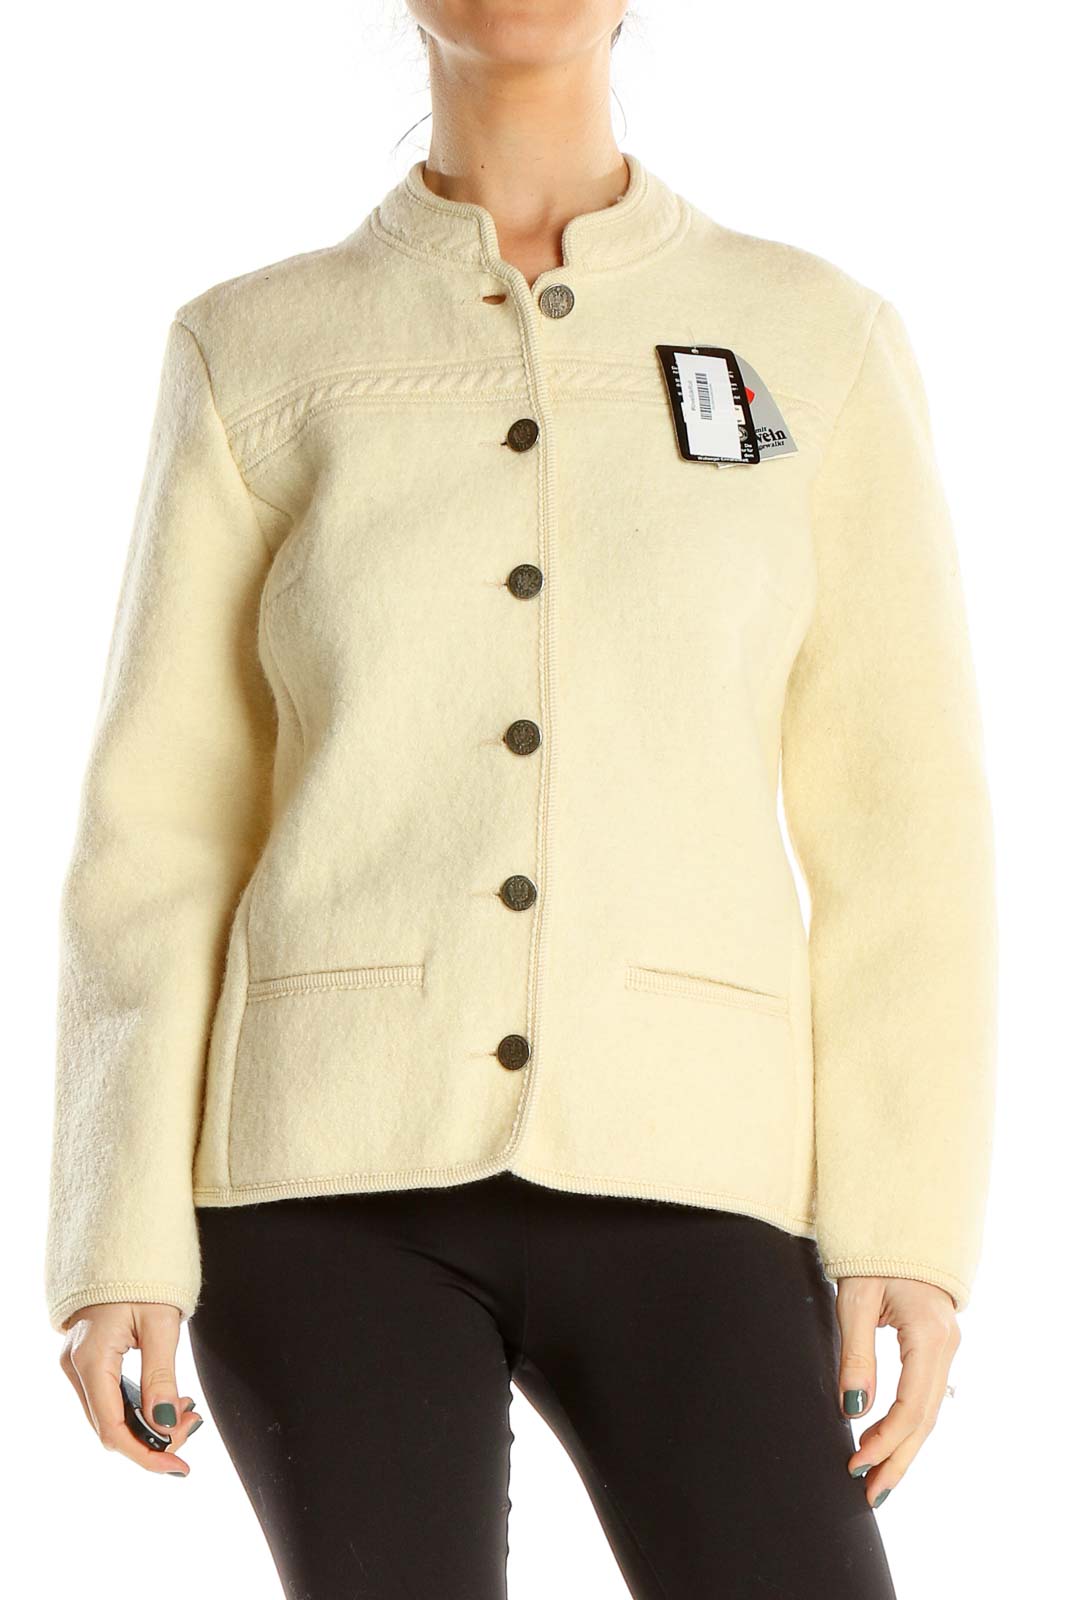 Cream Knit Retro Jacket Front